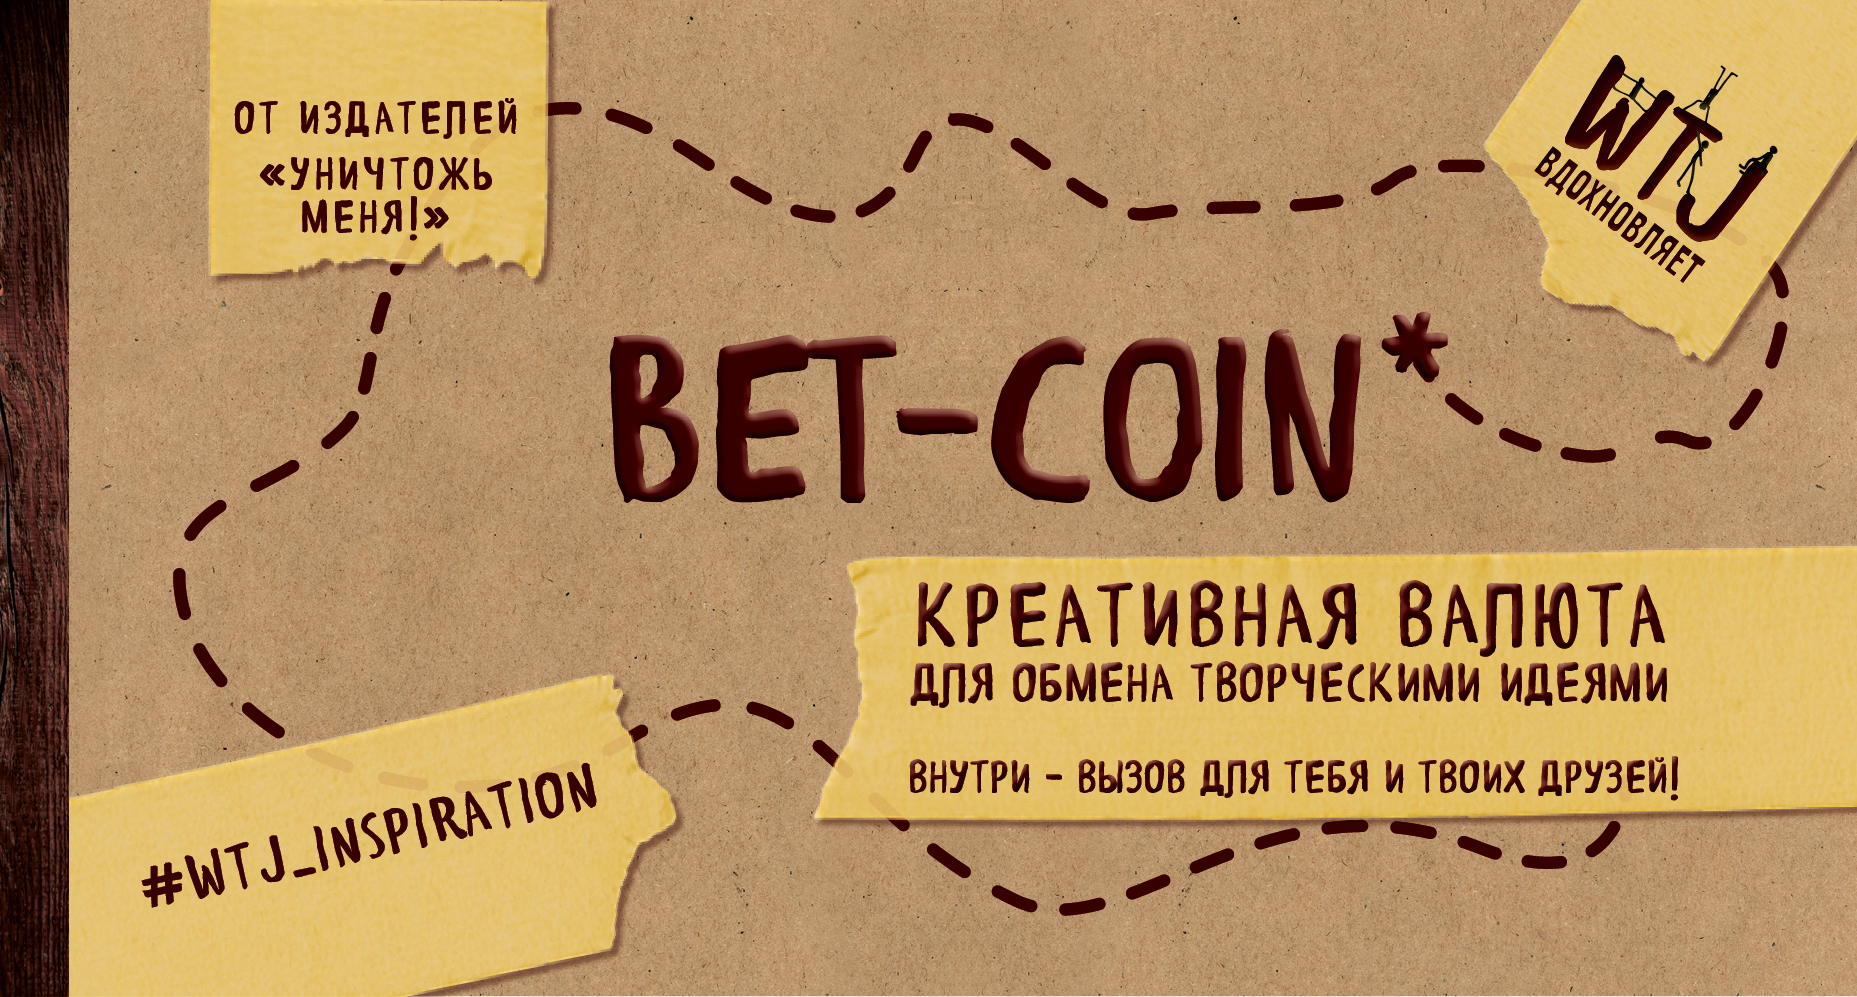 Bet-coin.       ( )